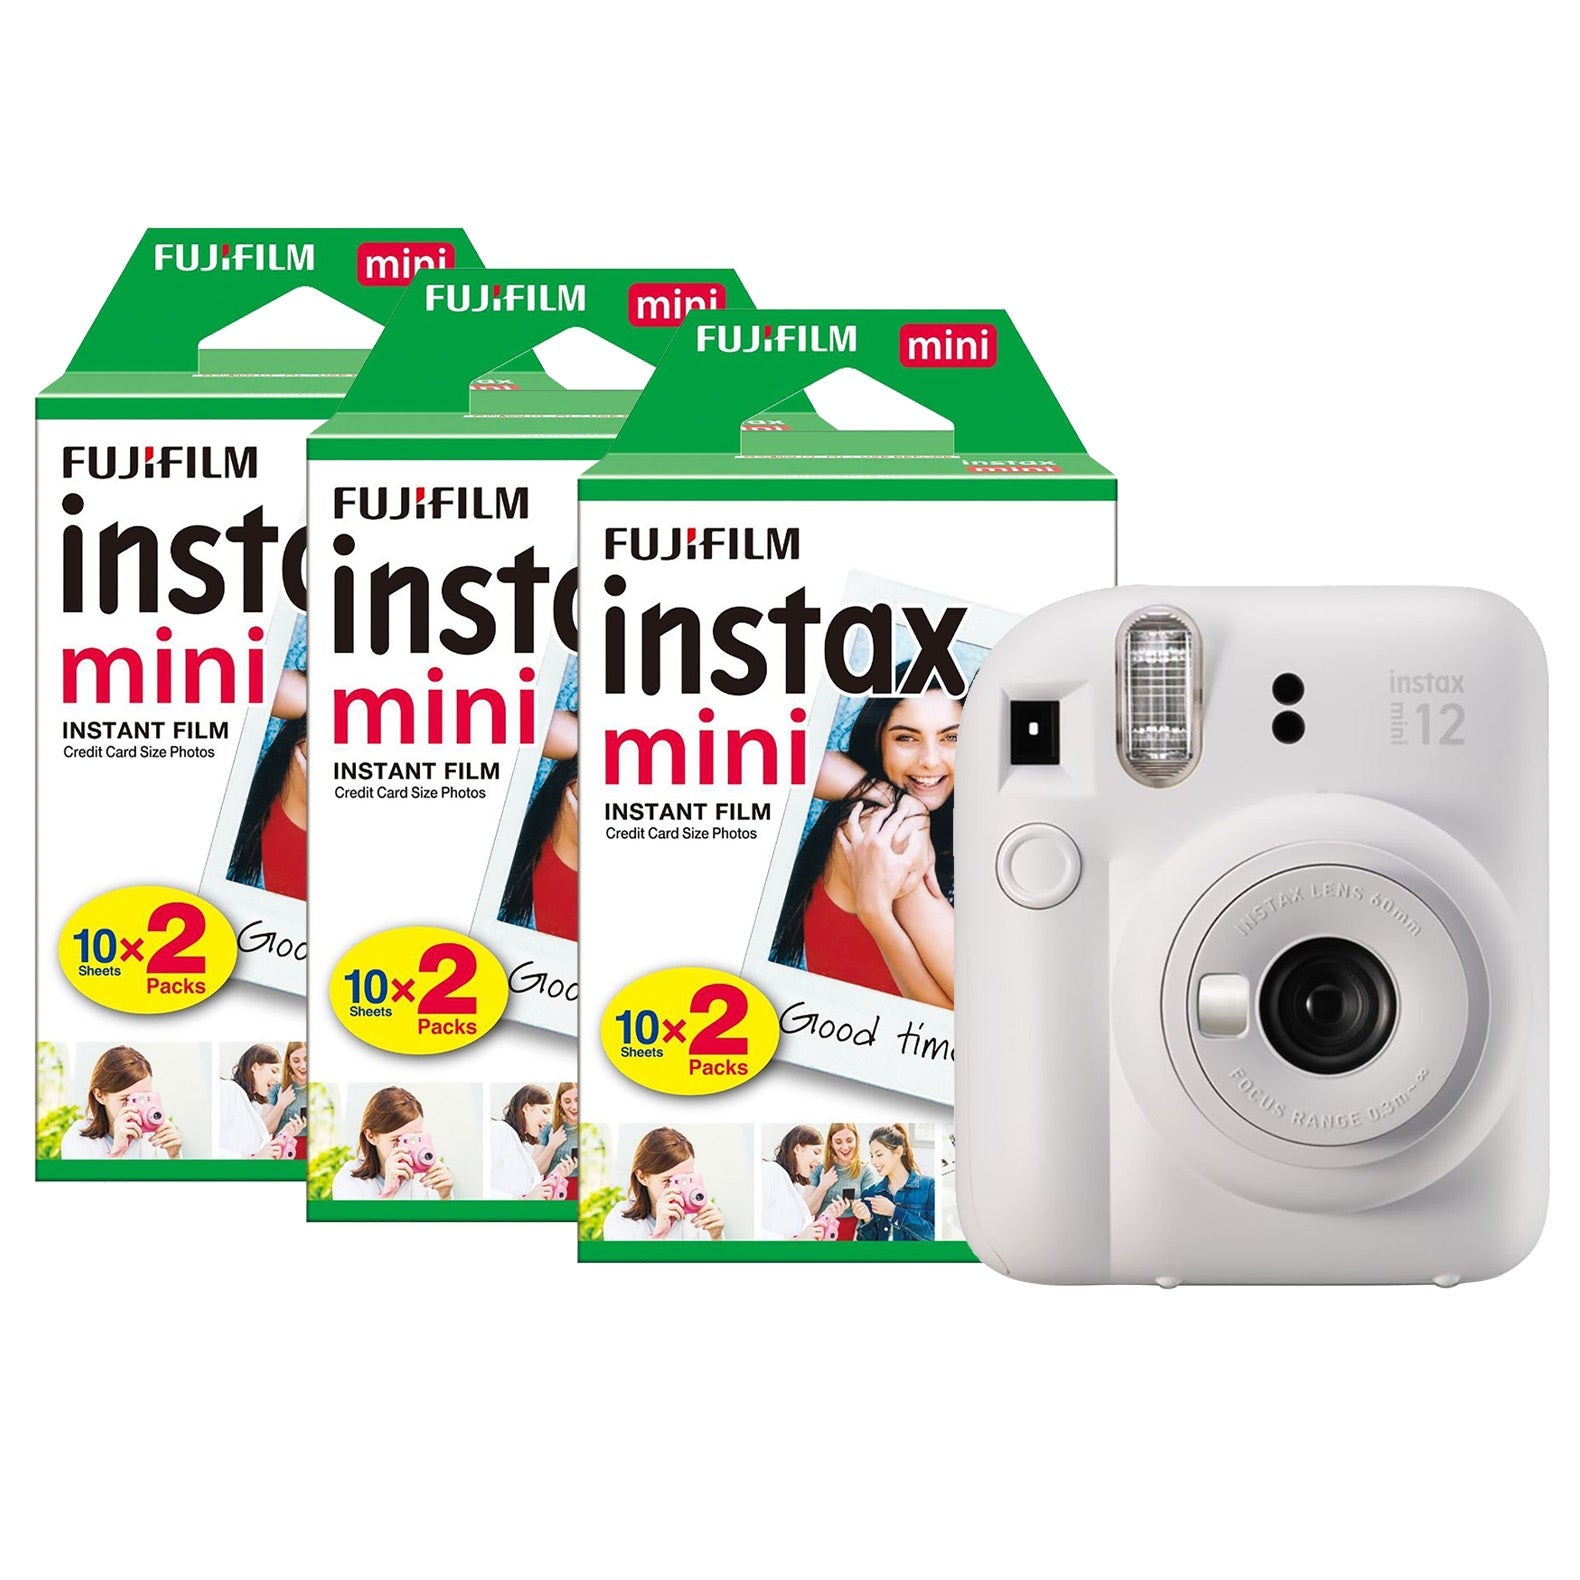 Fujifilm INSTAX mini 12 Album - Blanc d'argile - Kamera Express